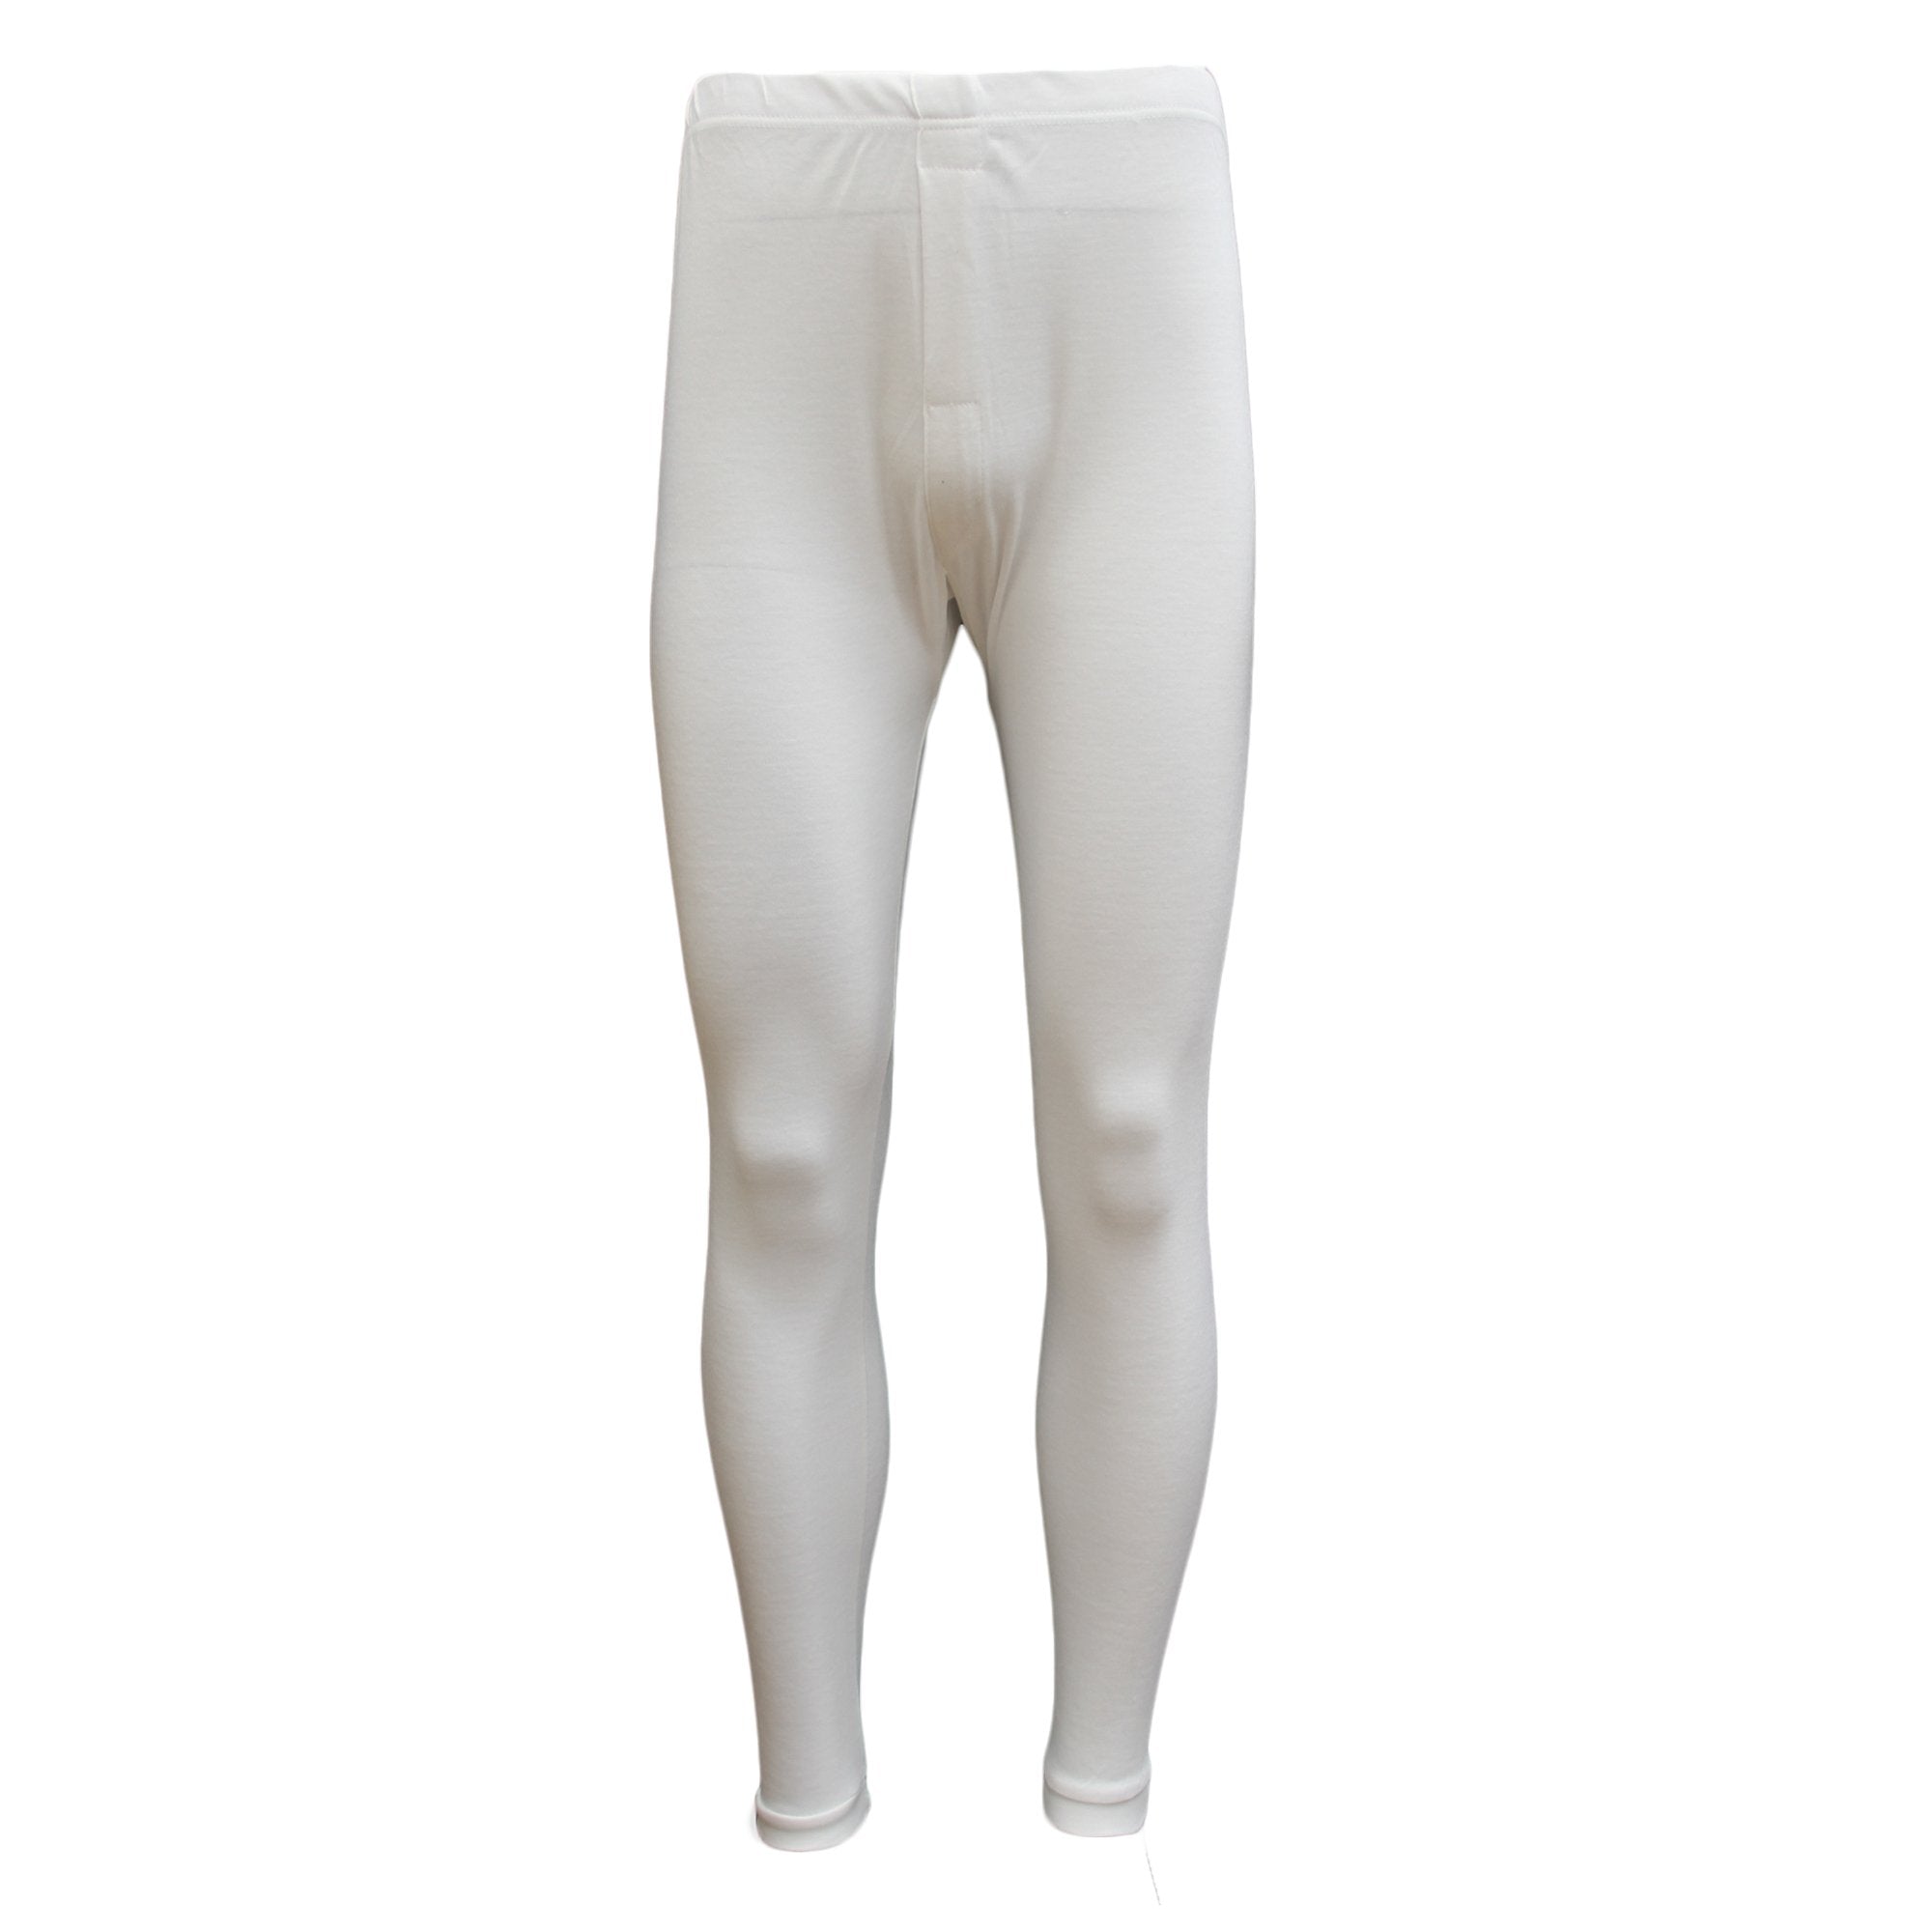 Mens Merino Wool Top Pants Thermal Leggings Long Johns Underwear Pajamas, Men's Long Johns - Beige, 2XL